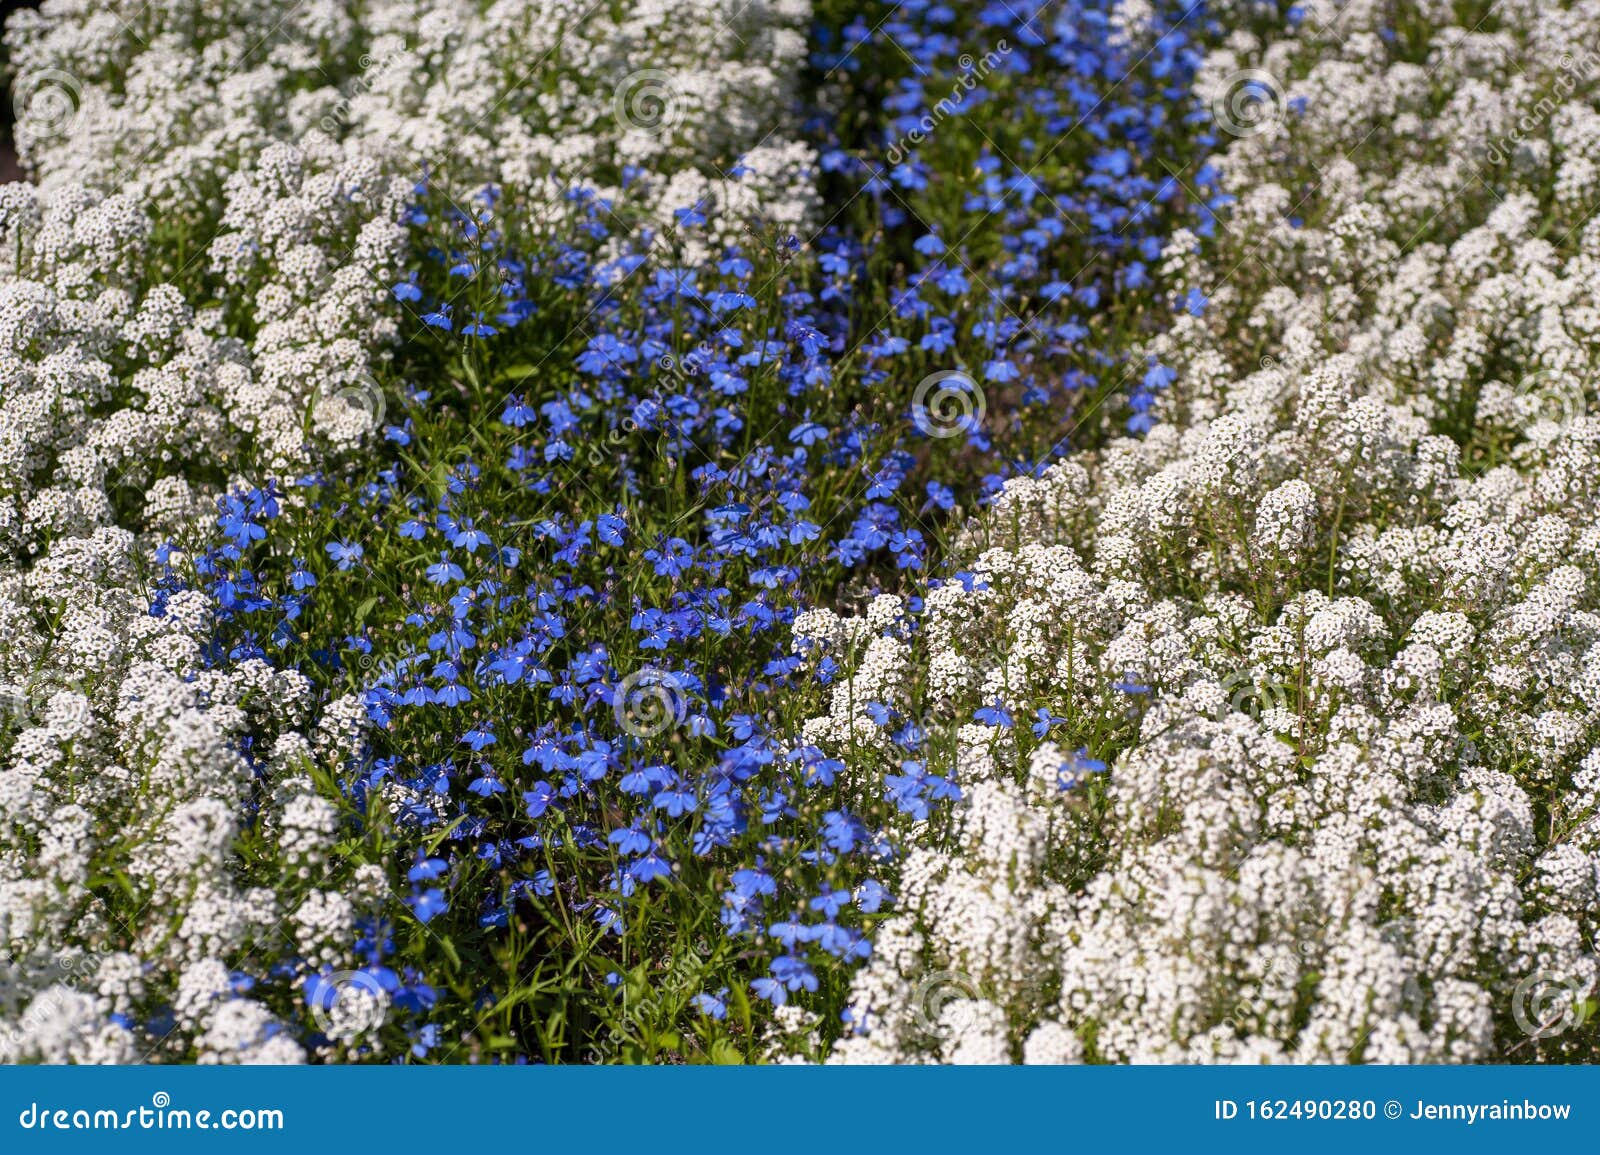 Annual Flowers Sweet Alyssum - Lobularia Maritima Syn. Alyssum Maritimum and Blue Purple Lobelia Stock Photo - Image of brassicaceae, gardening: 162490280